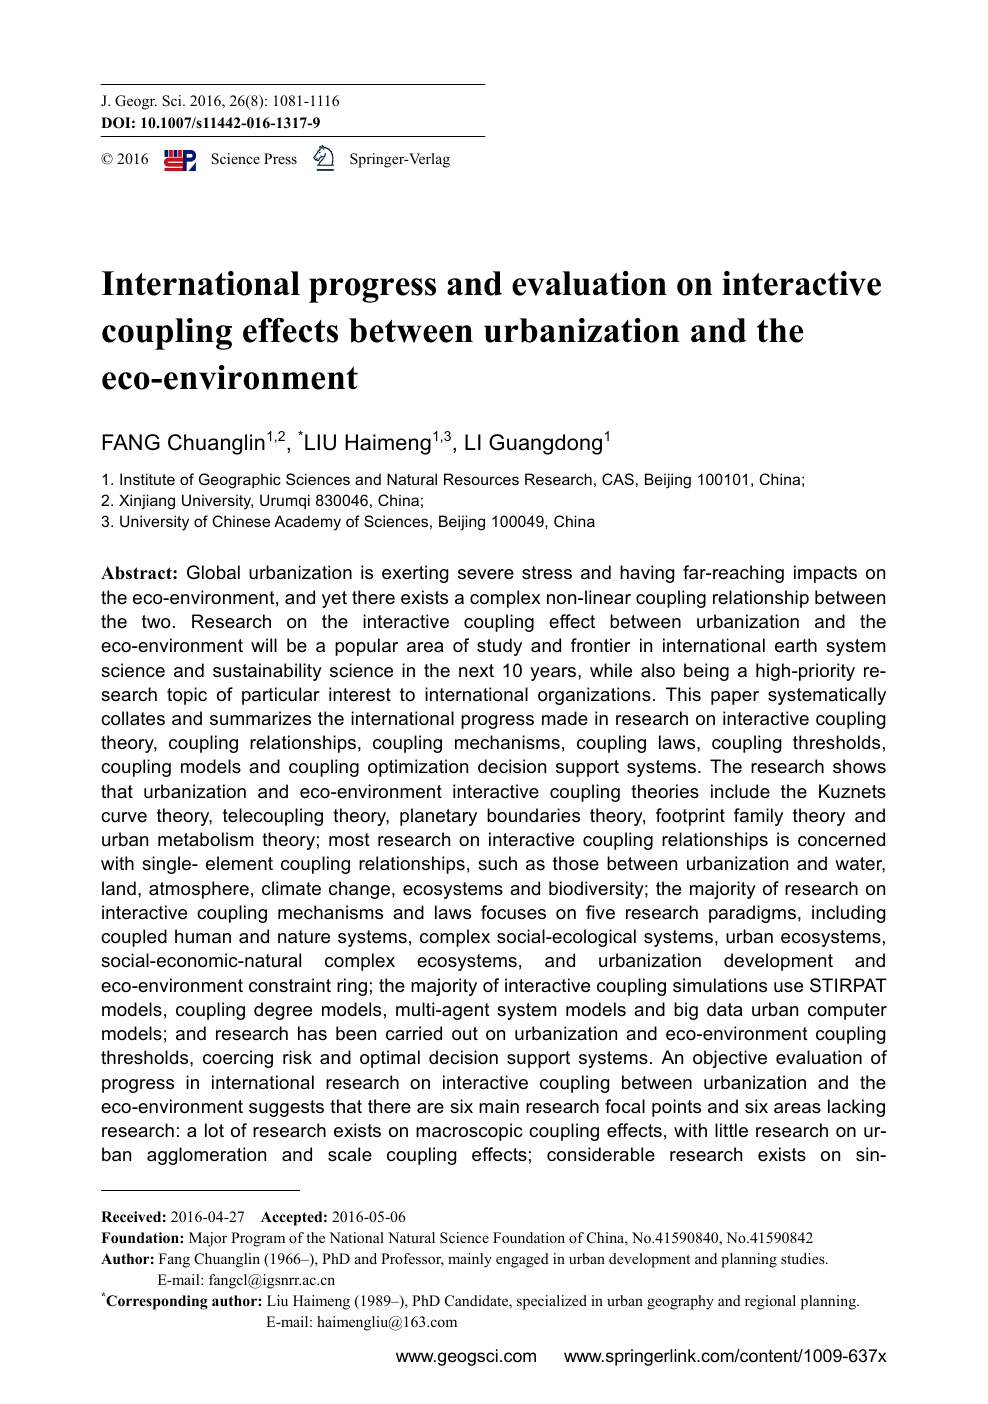 International Progress And Evaluation On Interactive - 